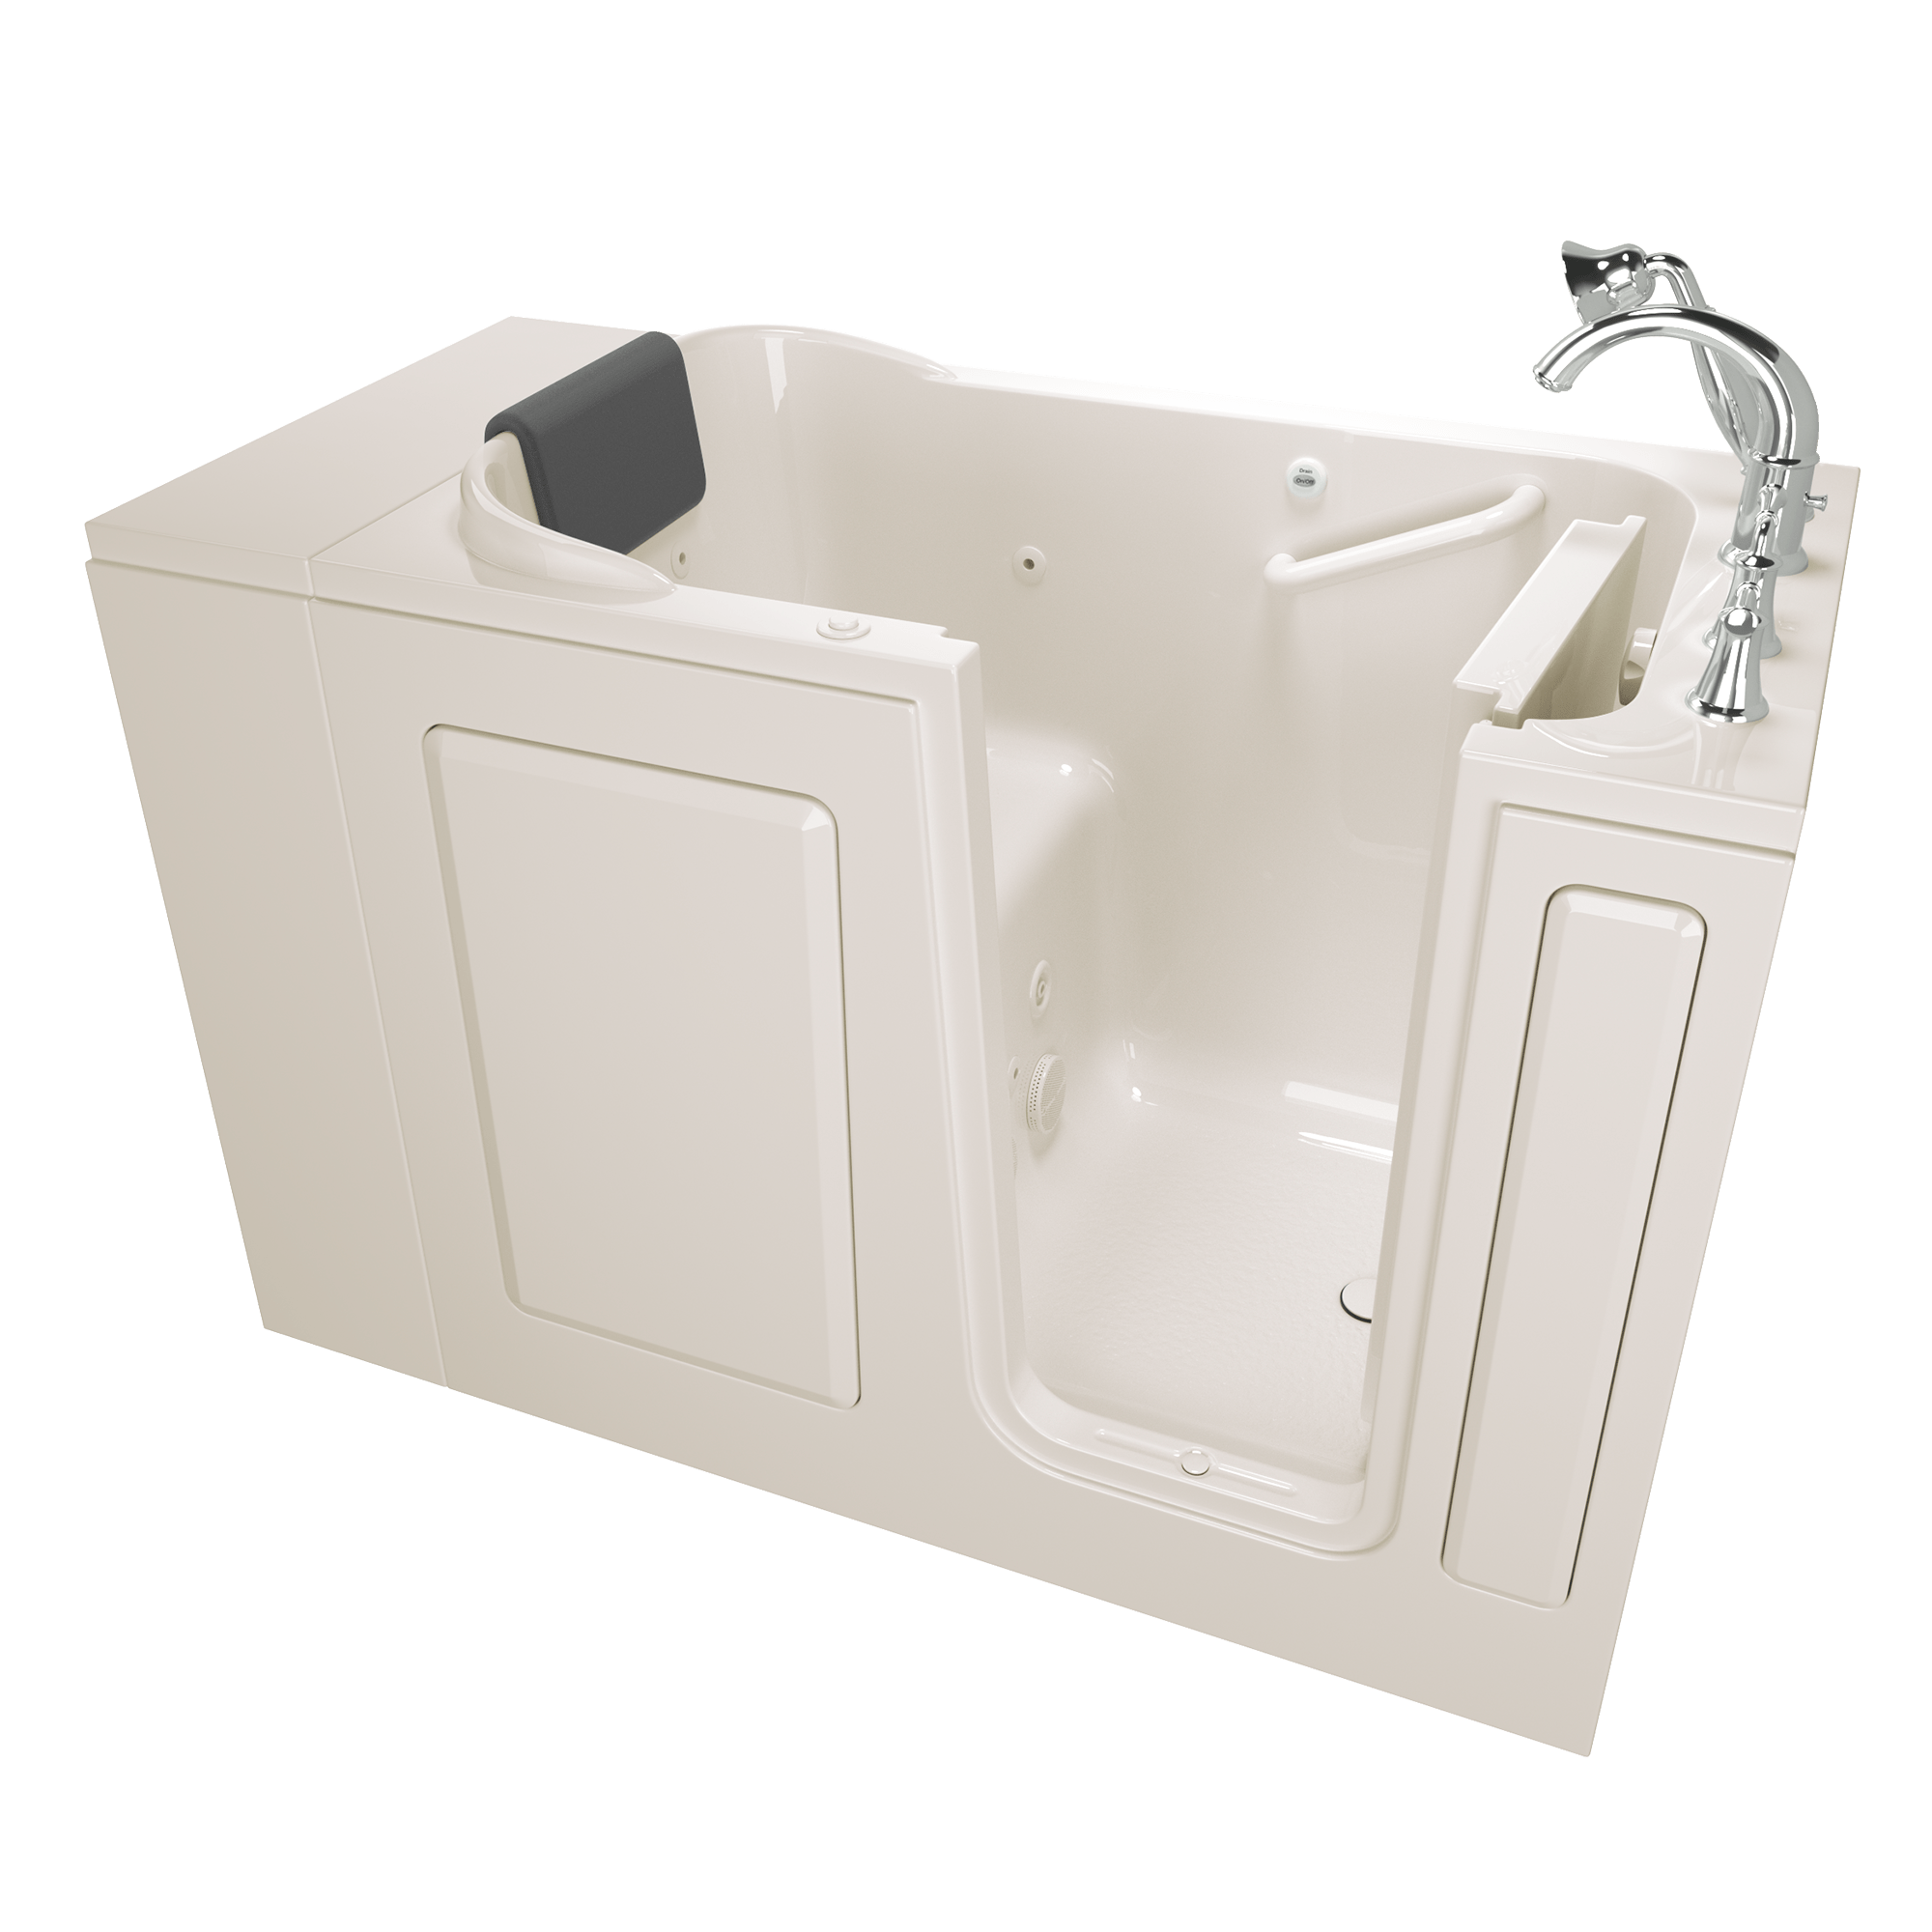 Gelcoat Premium Series 48x28 Inch Walk-In Bathtub with Jet Massage System - Right Hand Door and Drain